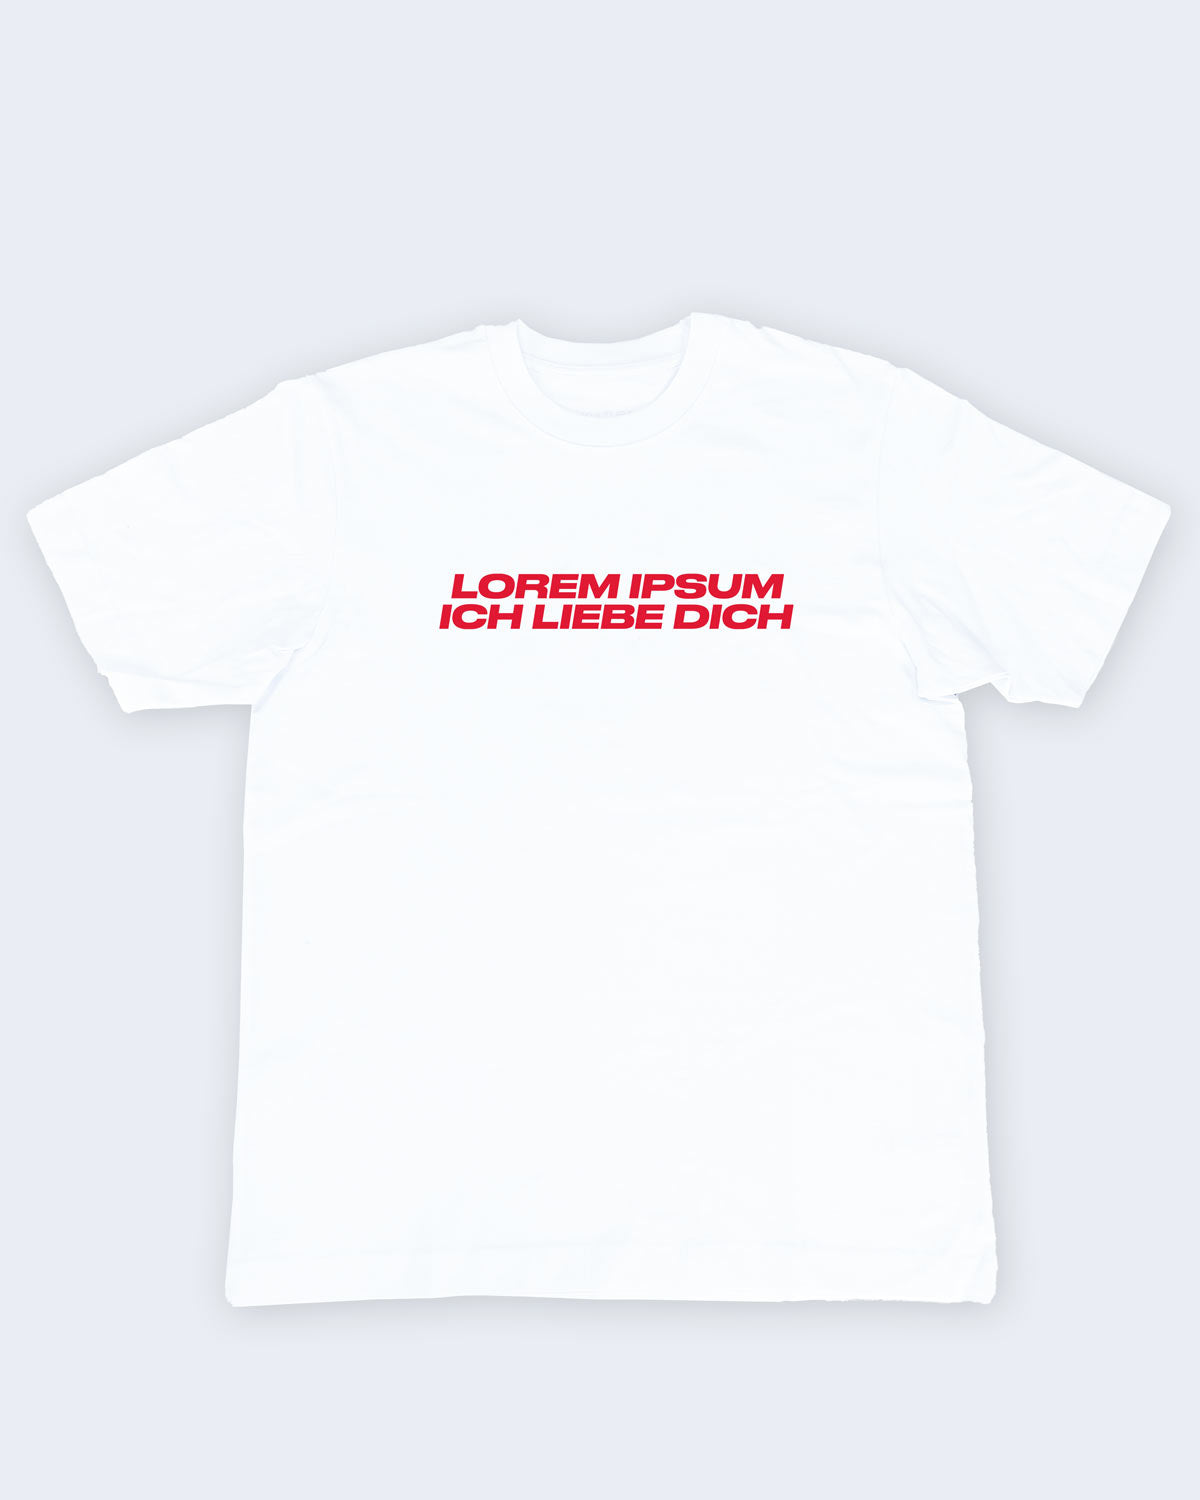 LOREM IPSUM ILB 2024 Shirt by KUGU Studio